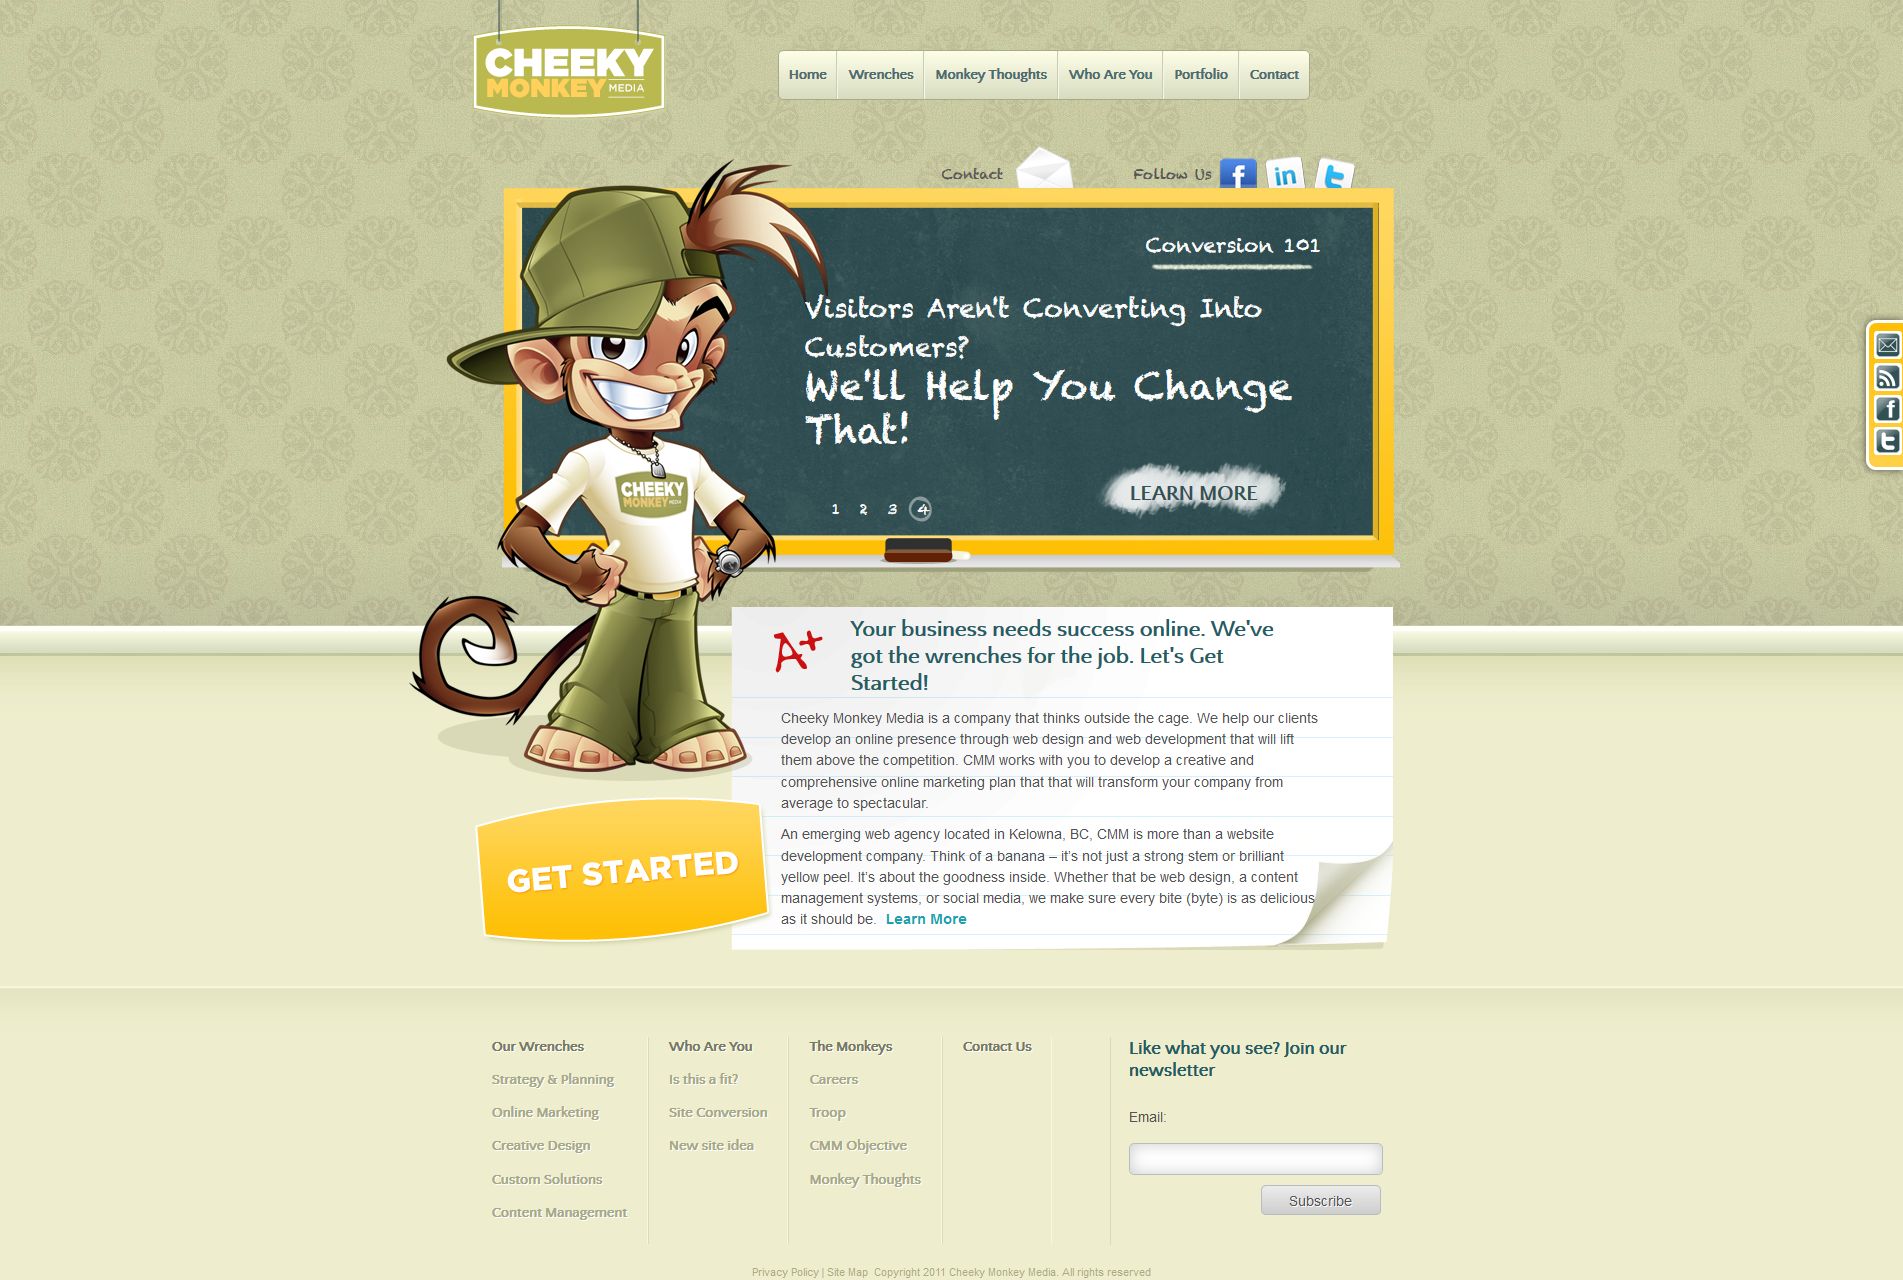 Cheeky Monkey Media's website old image